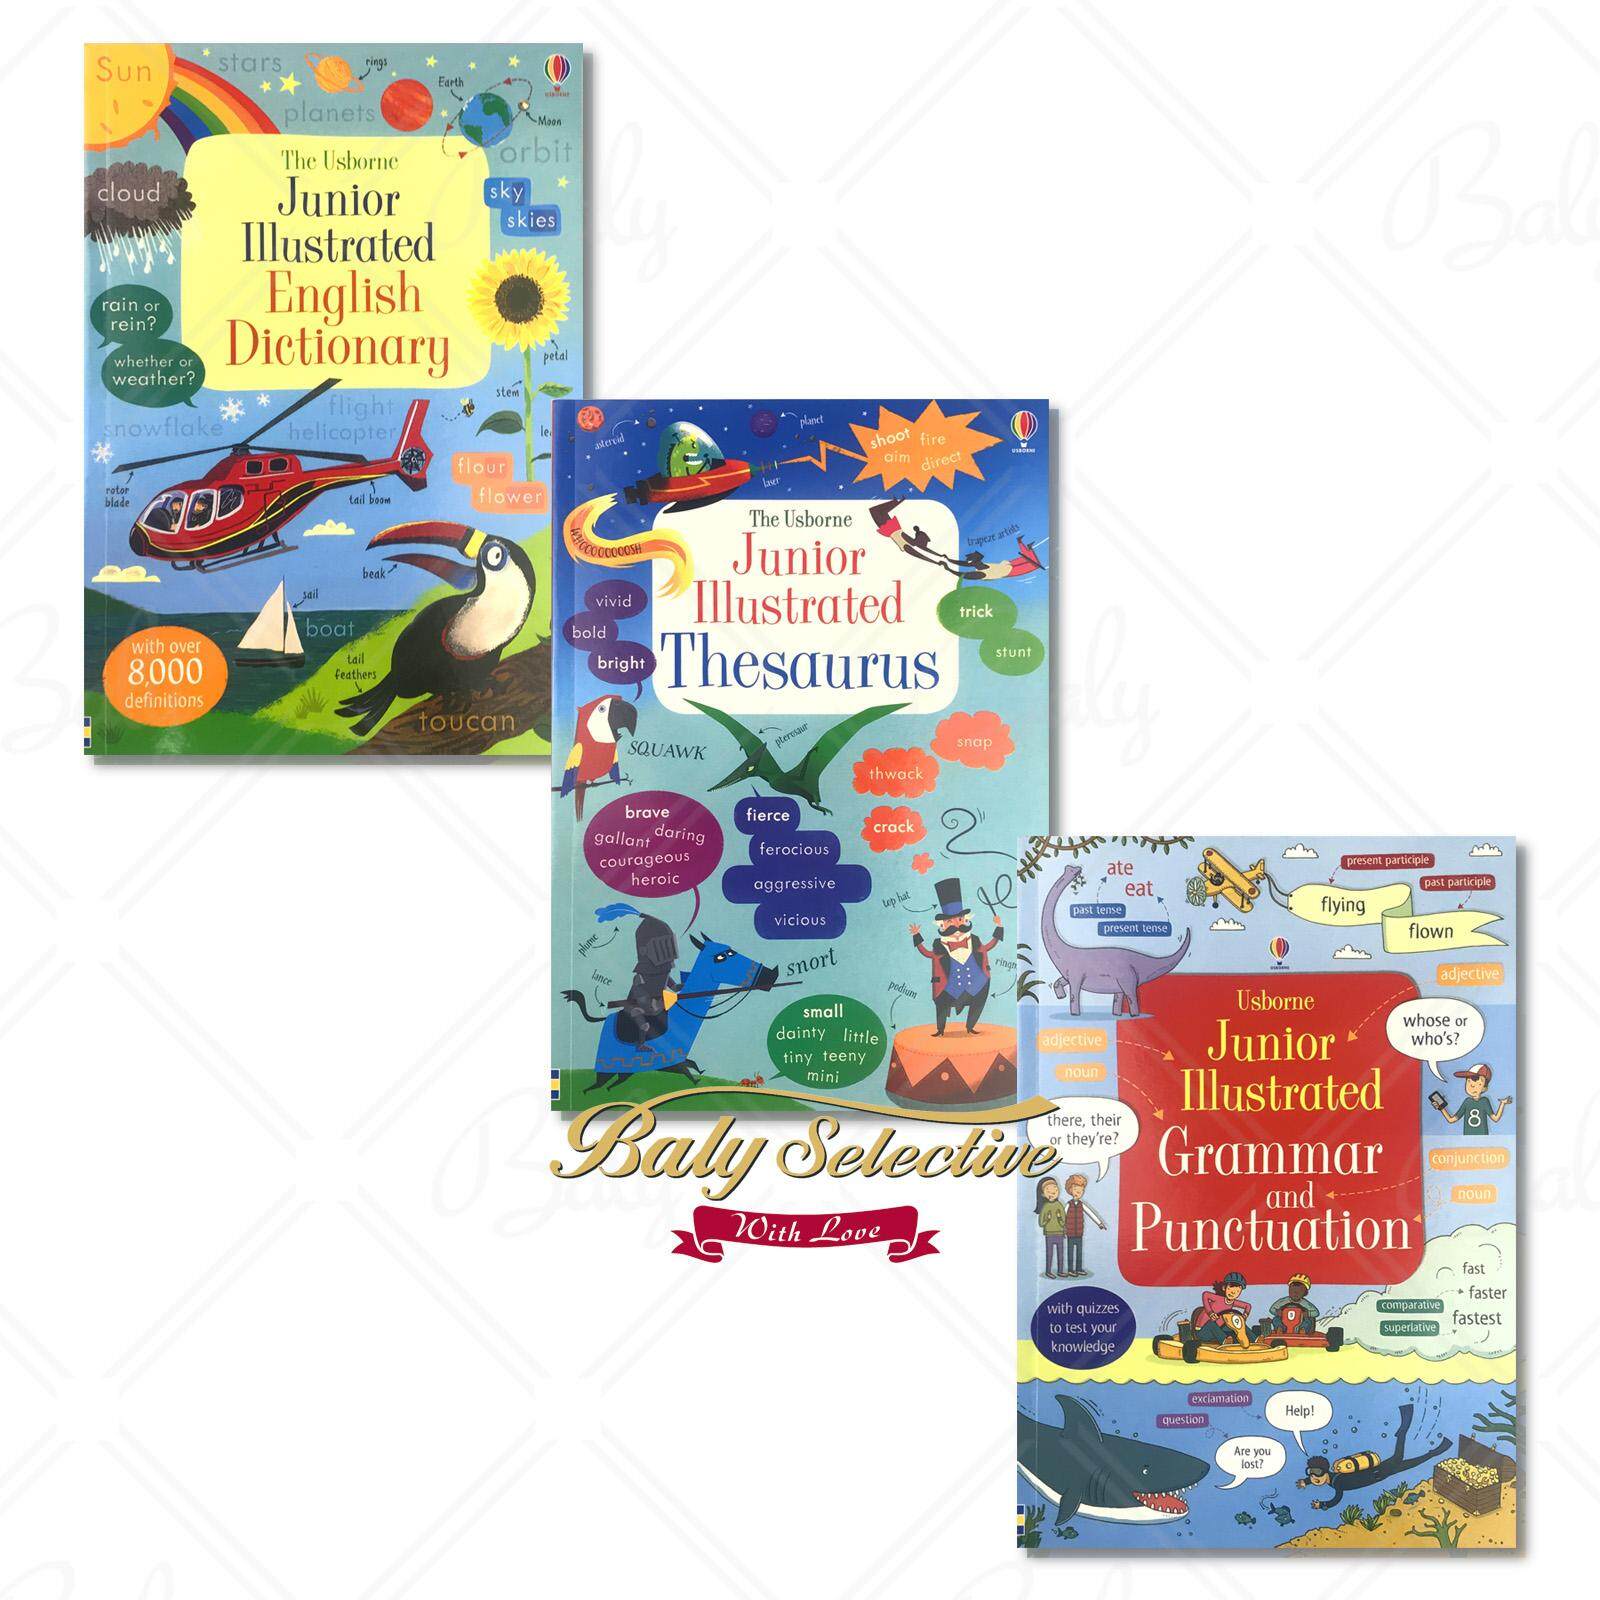 Usborne พจนานุกรมภาษาอังกฤษ Boxset for Writers Collection หนังสือการศึกษาเรียนรู้ภาษาอังกฤษทางเลือกที่ดีสำหรับเด็กเด็ก (3 Books Set Usborne Include Junior Illustrated English Dictionary, Thesaurus, Grammar and Punctuation)